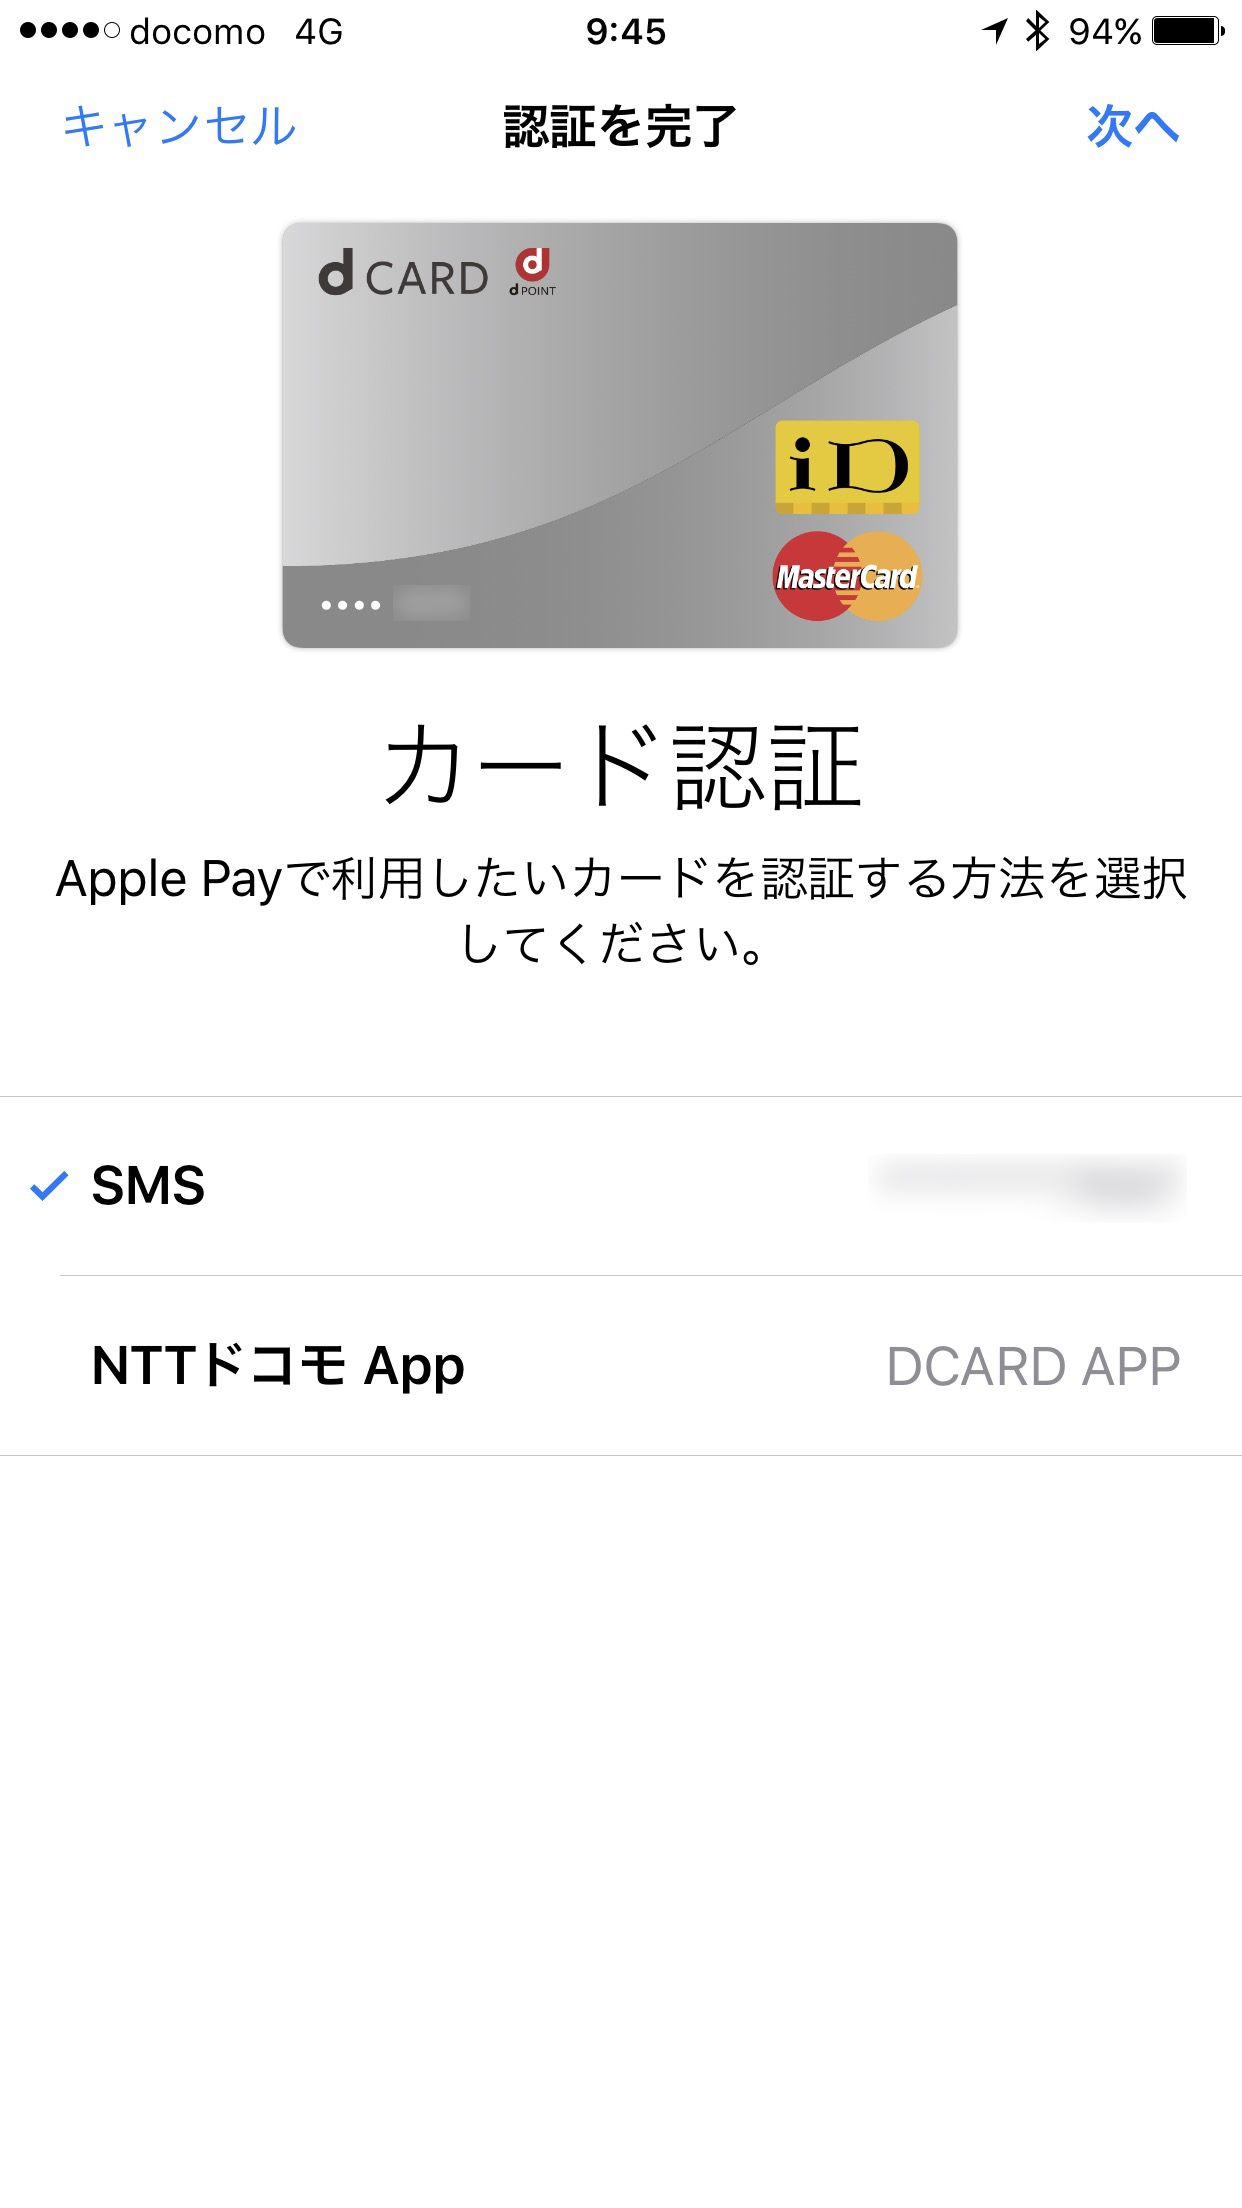 Apple Pay、クレカ不正登録で日本初の詐欺事件が発生